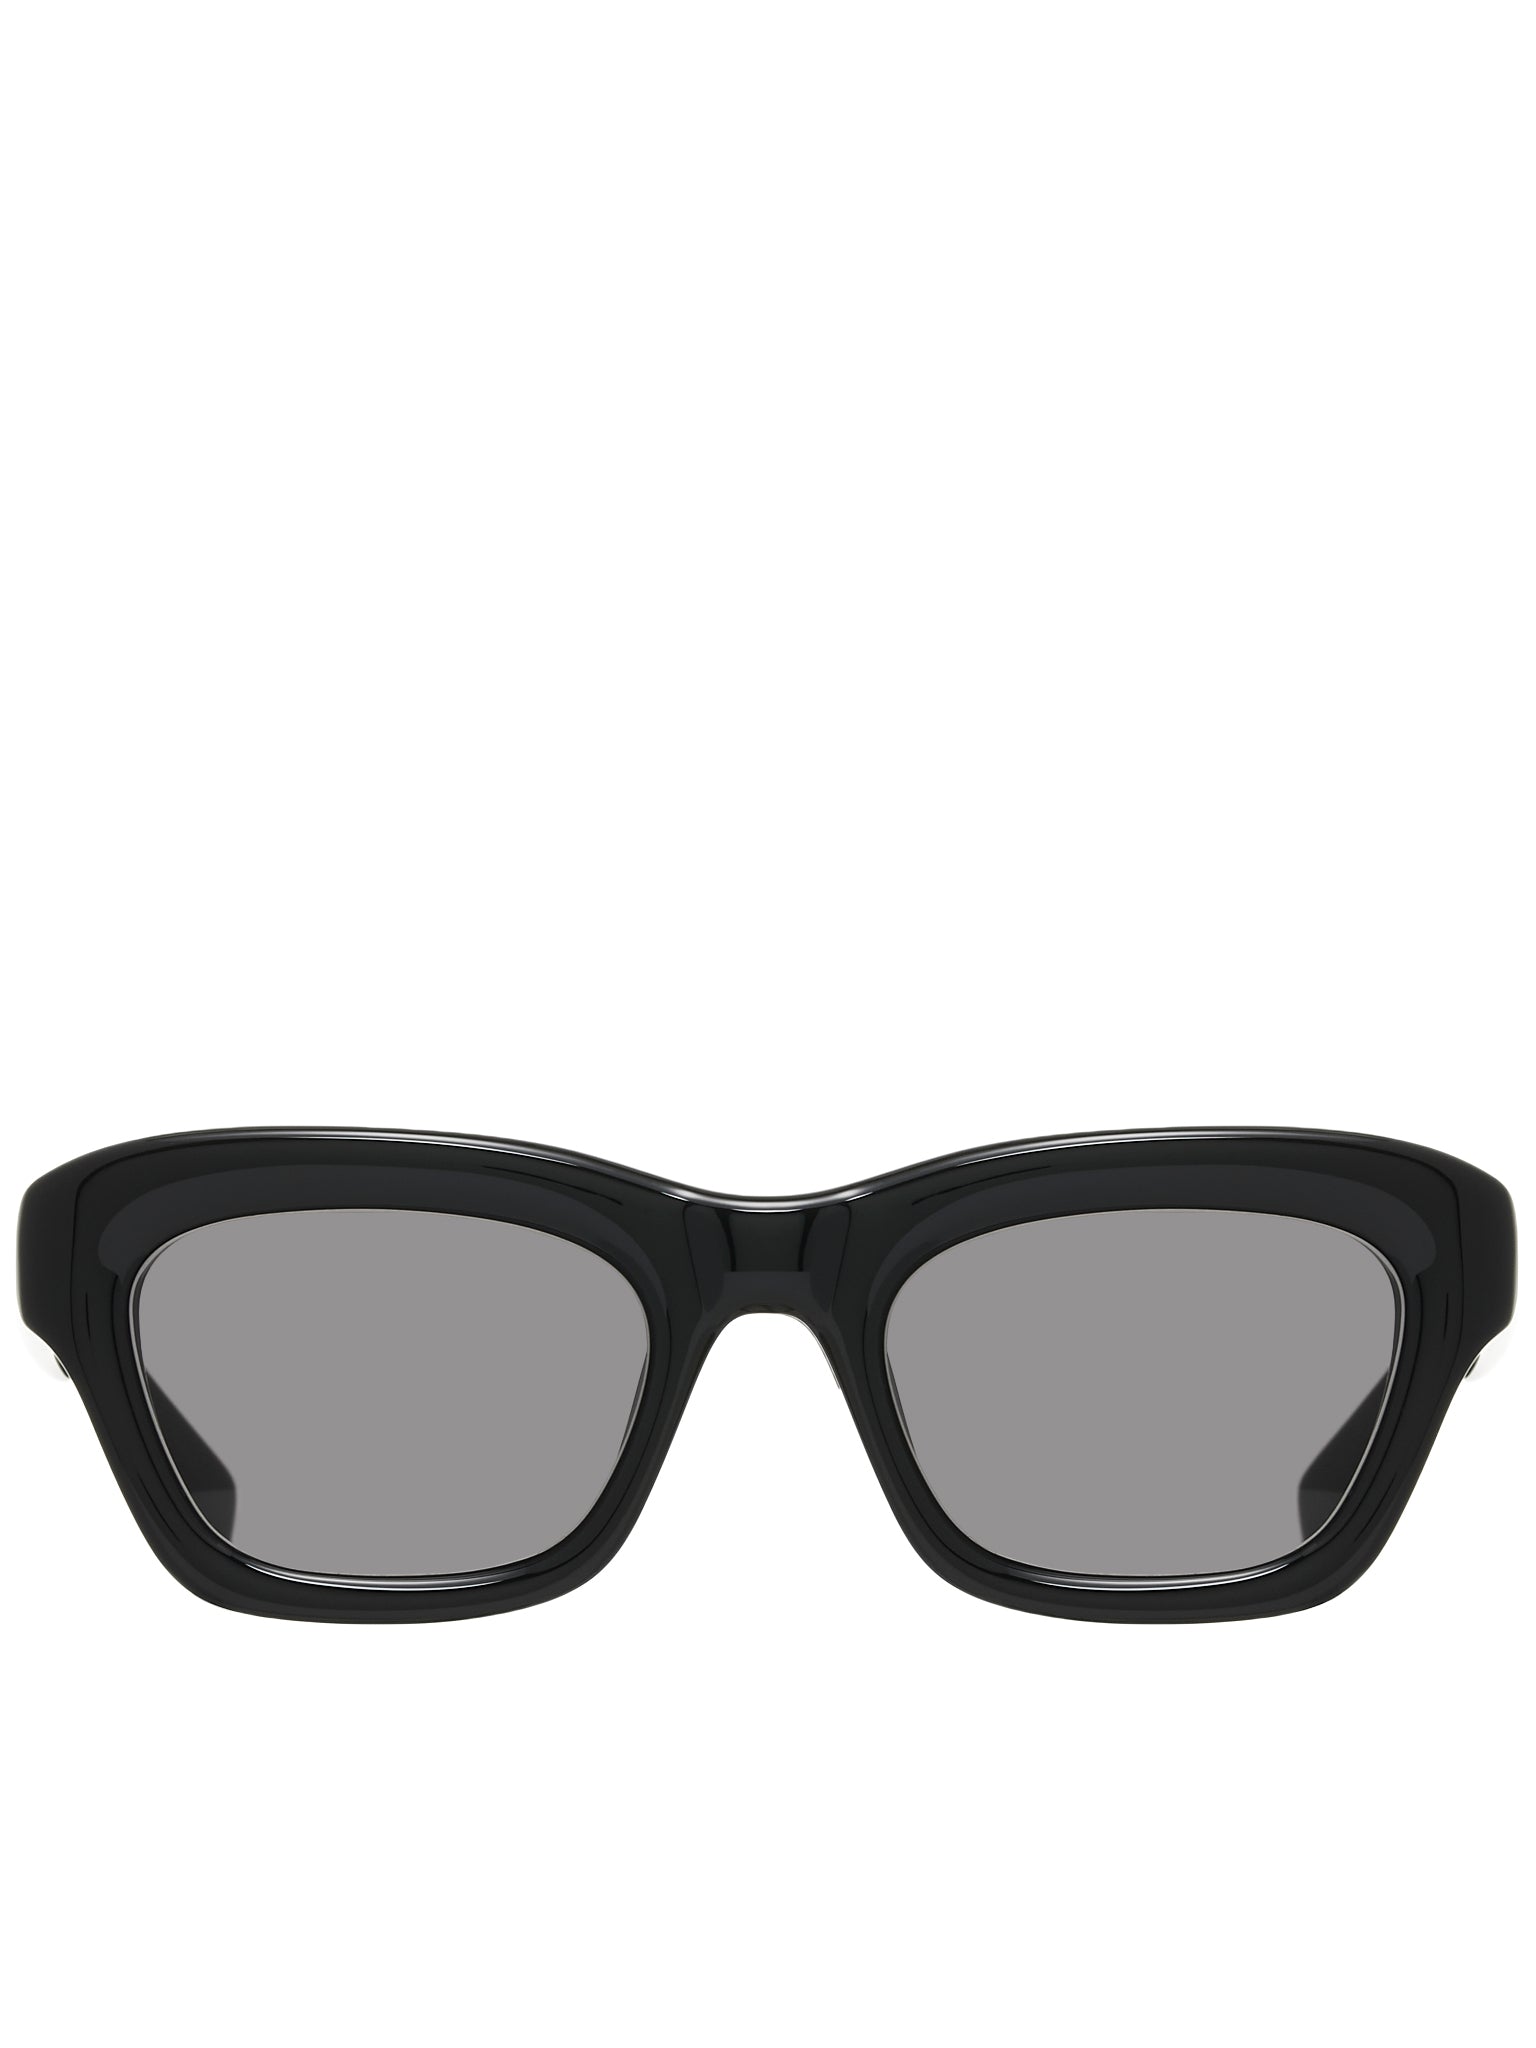 Architect Sunglasses (ARCHITECT-BLACK-BLACK)